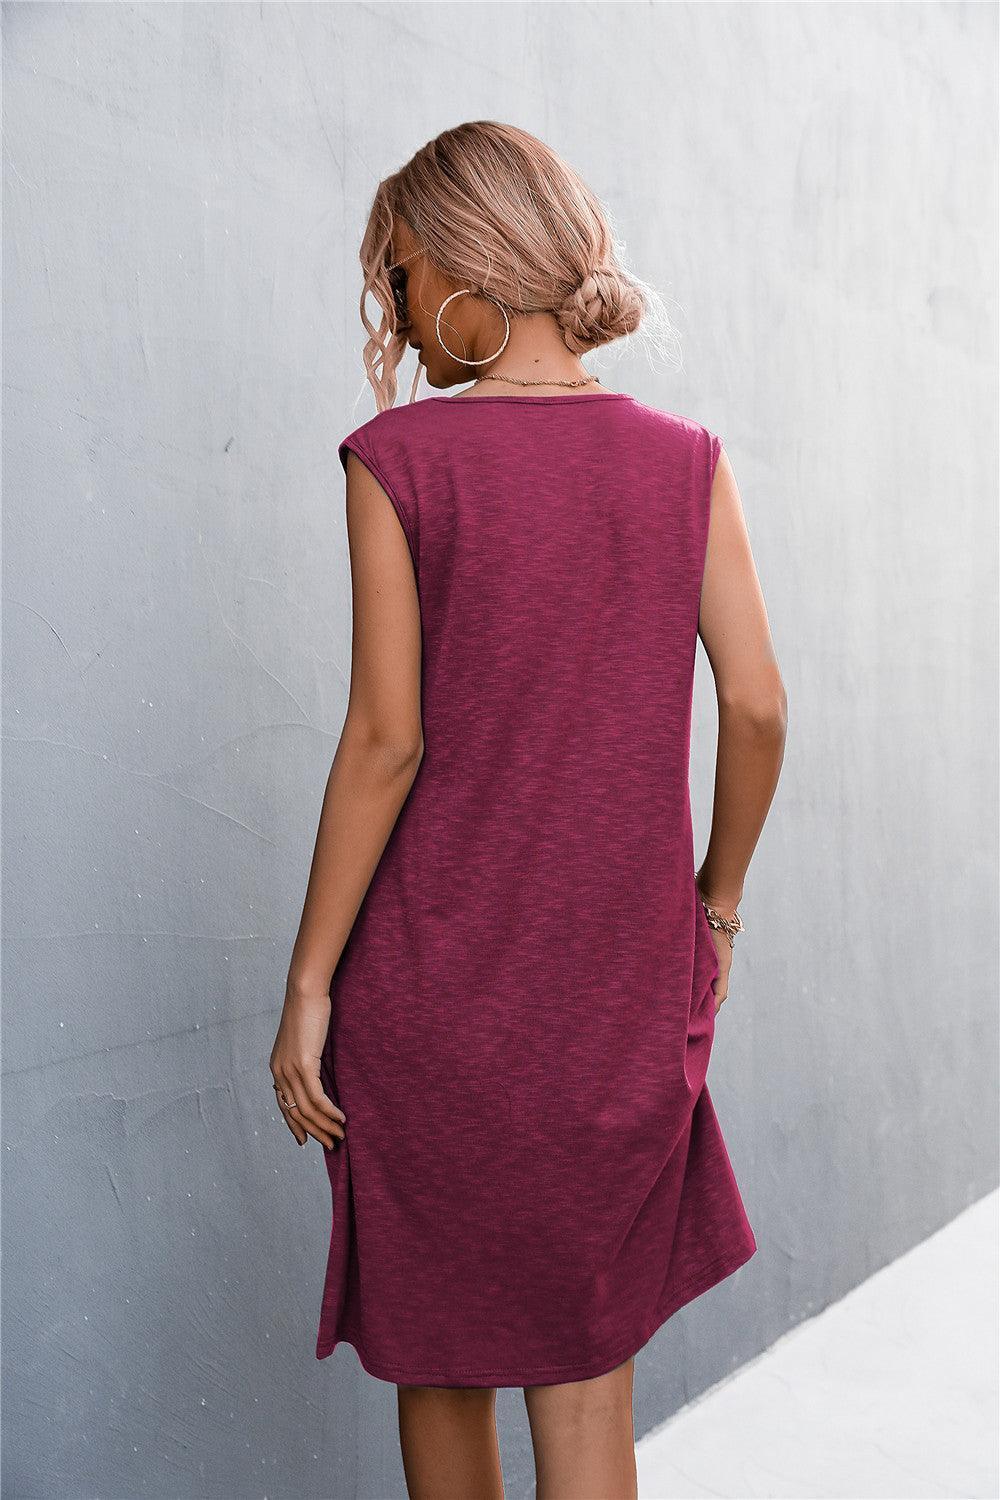 Versatile V-Neck Sleeveless Dress - MXSTUDIO.COM